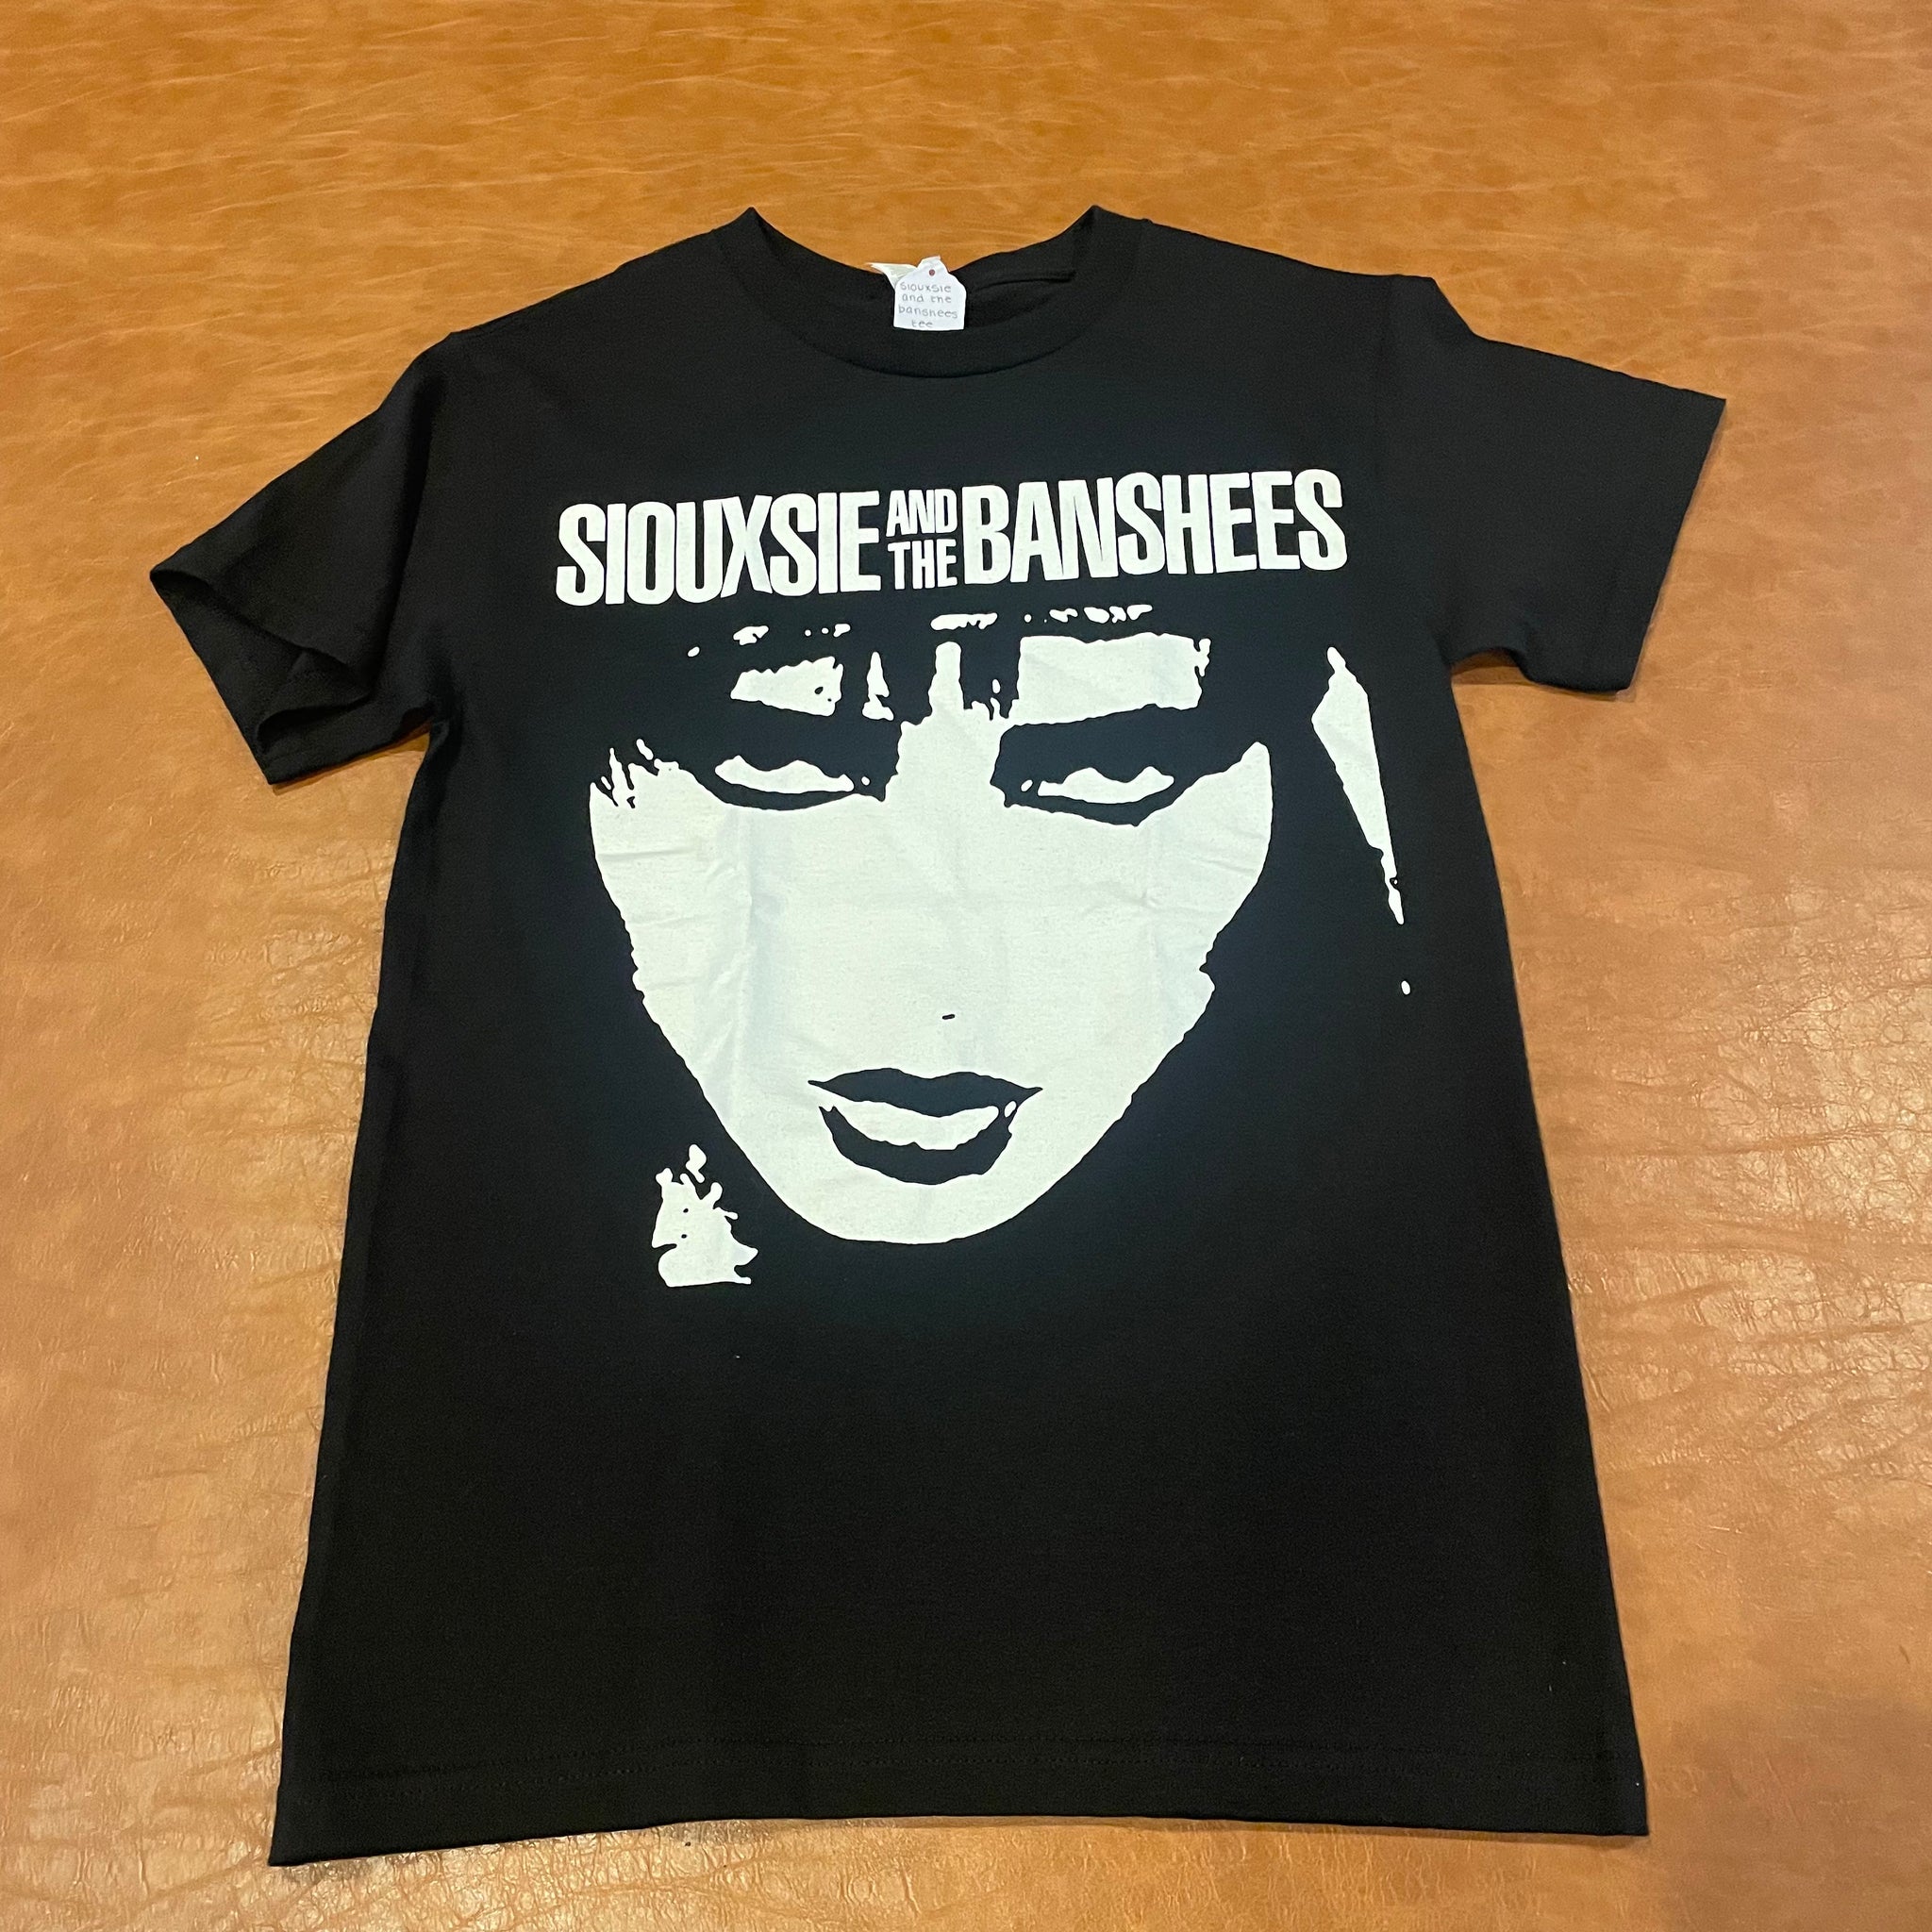 Siouxsie Banshees graphic tee